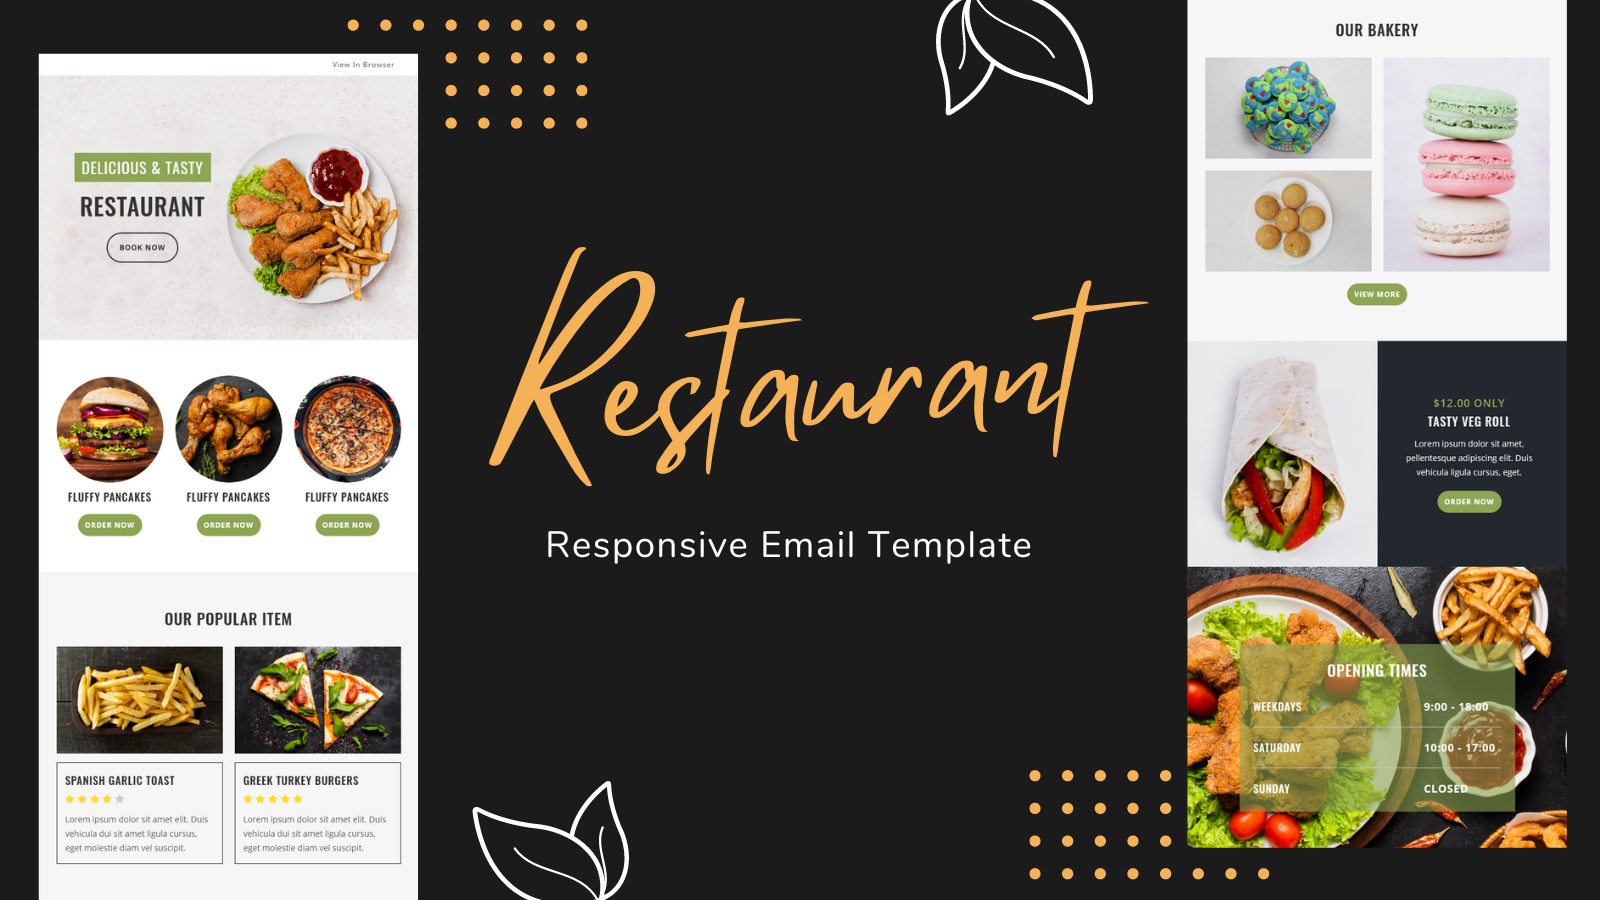 Restaurant – Multipurpose Responsive Email Template